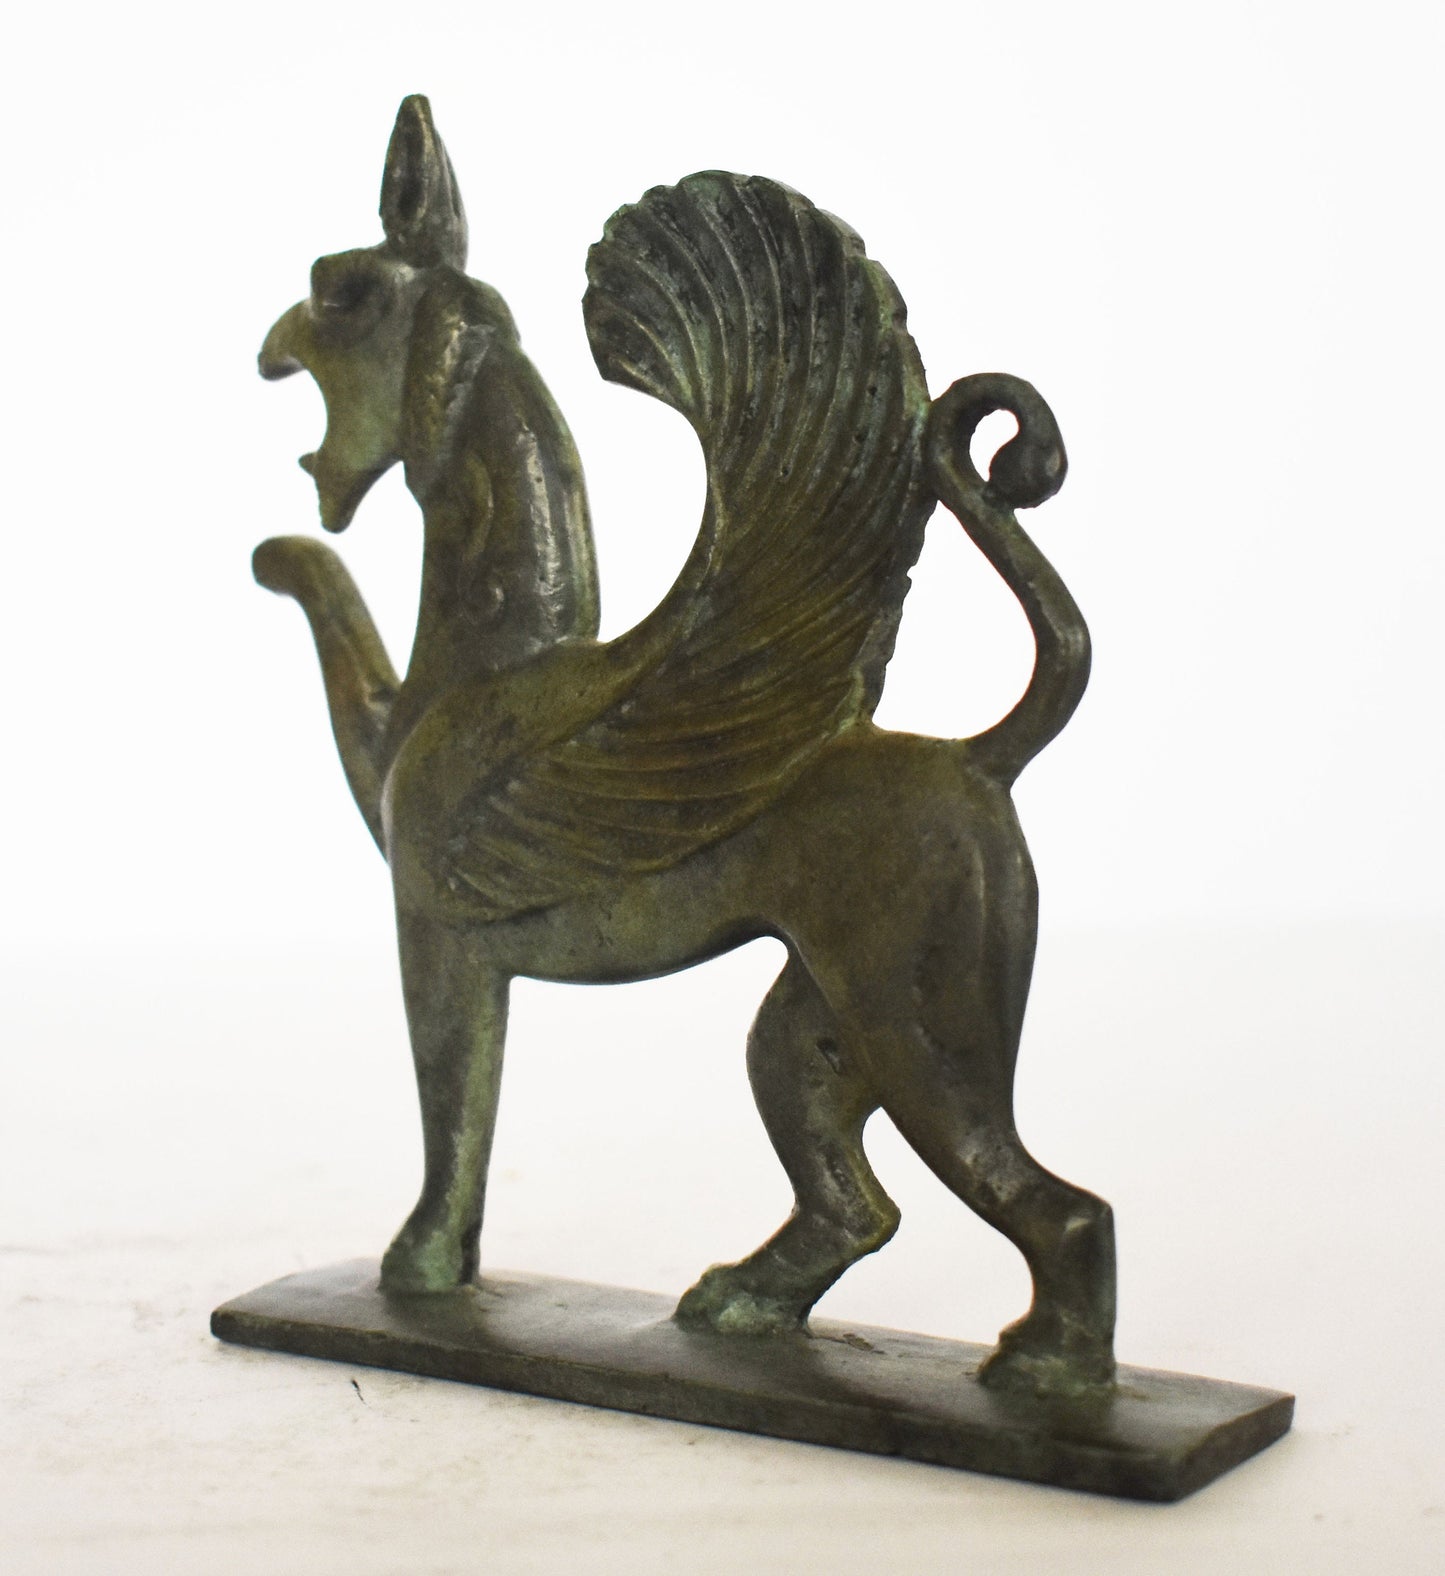 Griffin -  marble base - Ancient Greek legendary creature - Museum Replica - pure Bronze Sculpture